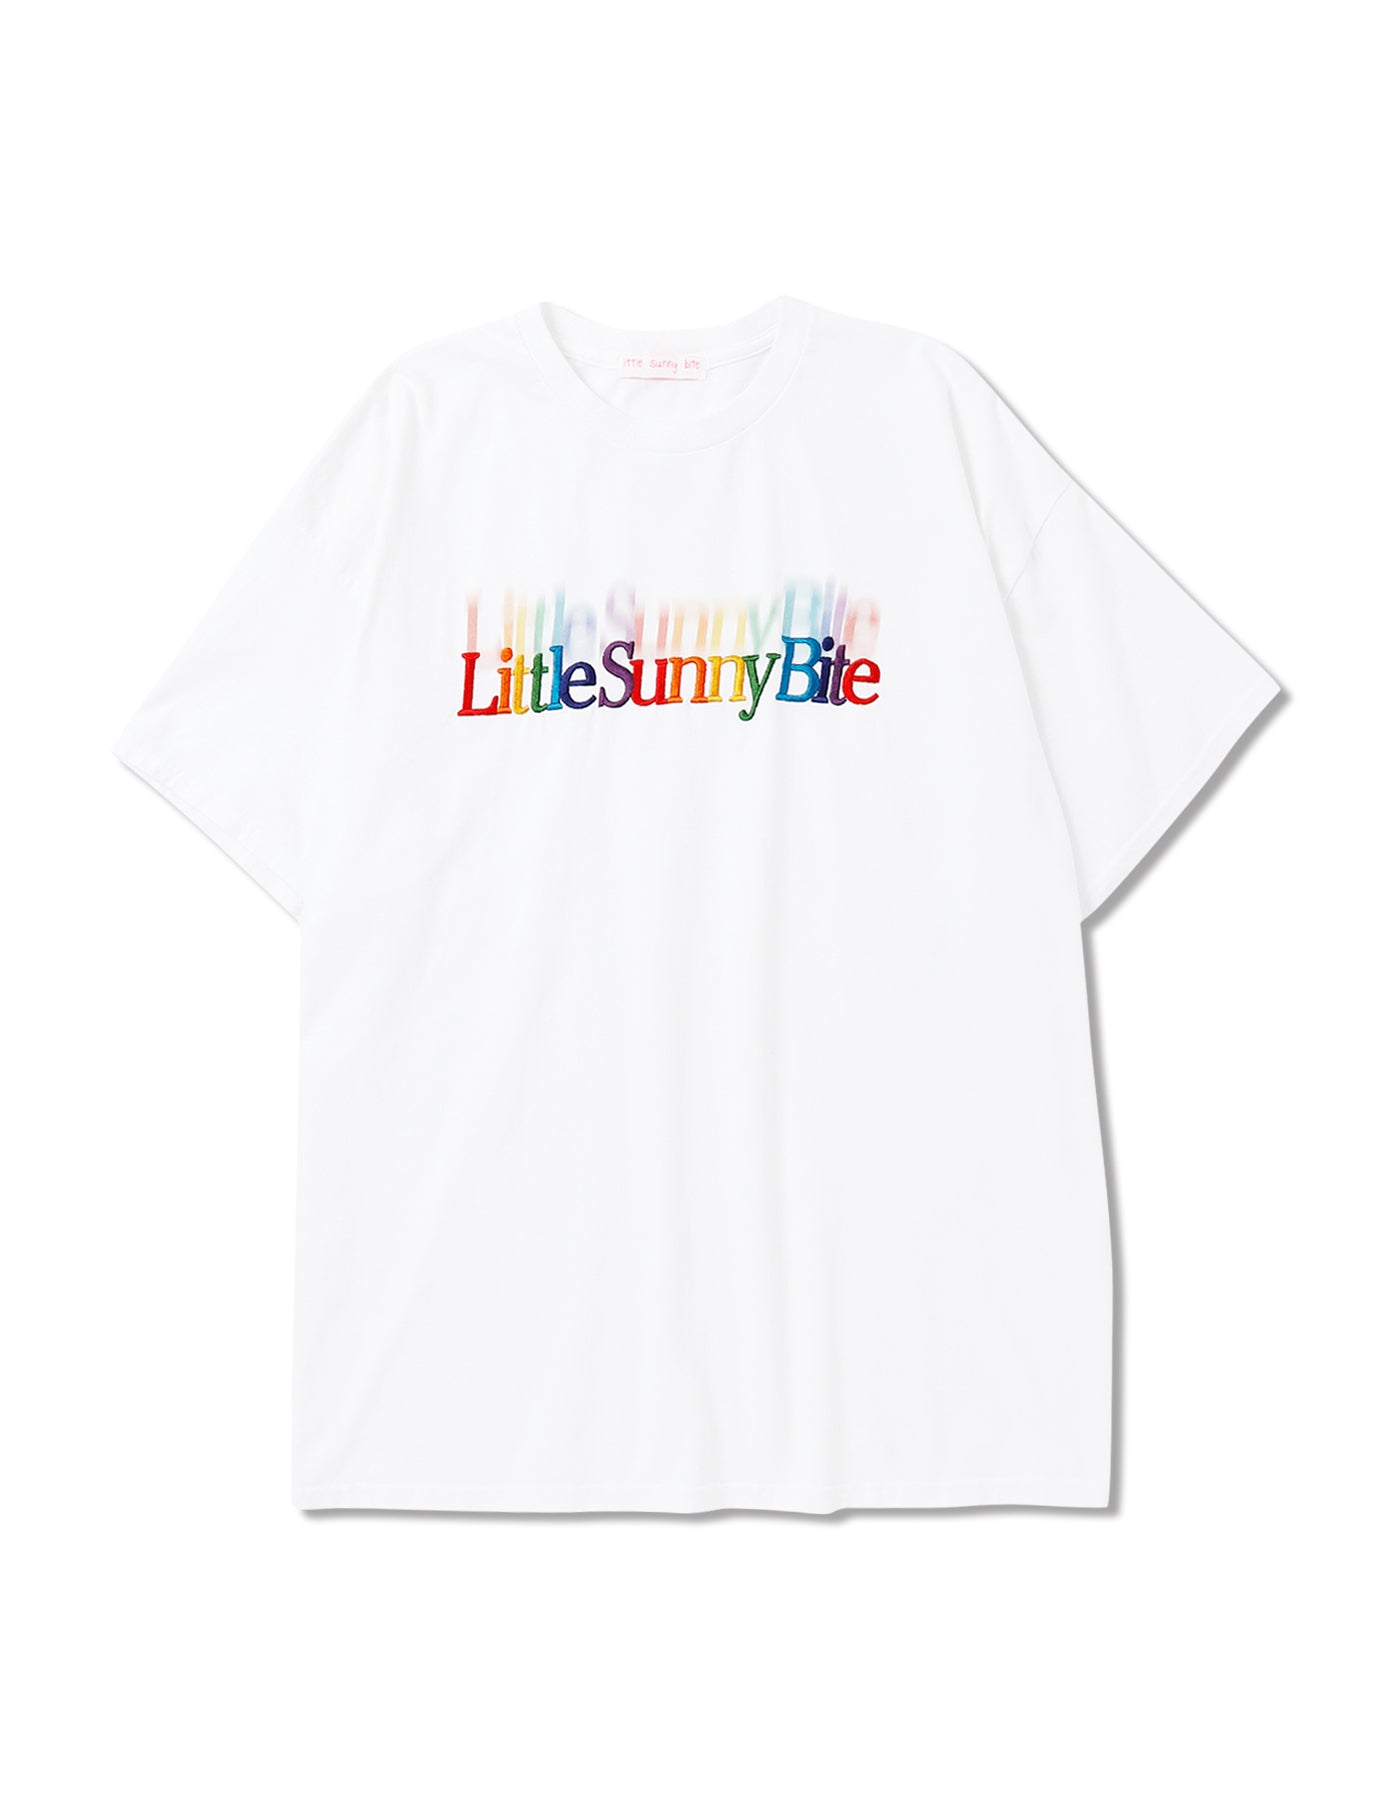 LittleSunnyBite/リトルサニーバイト/little sunny bite Stitch big tee-